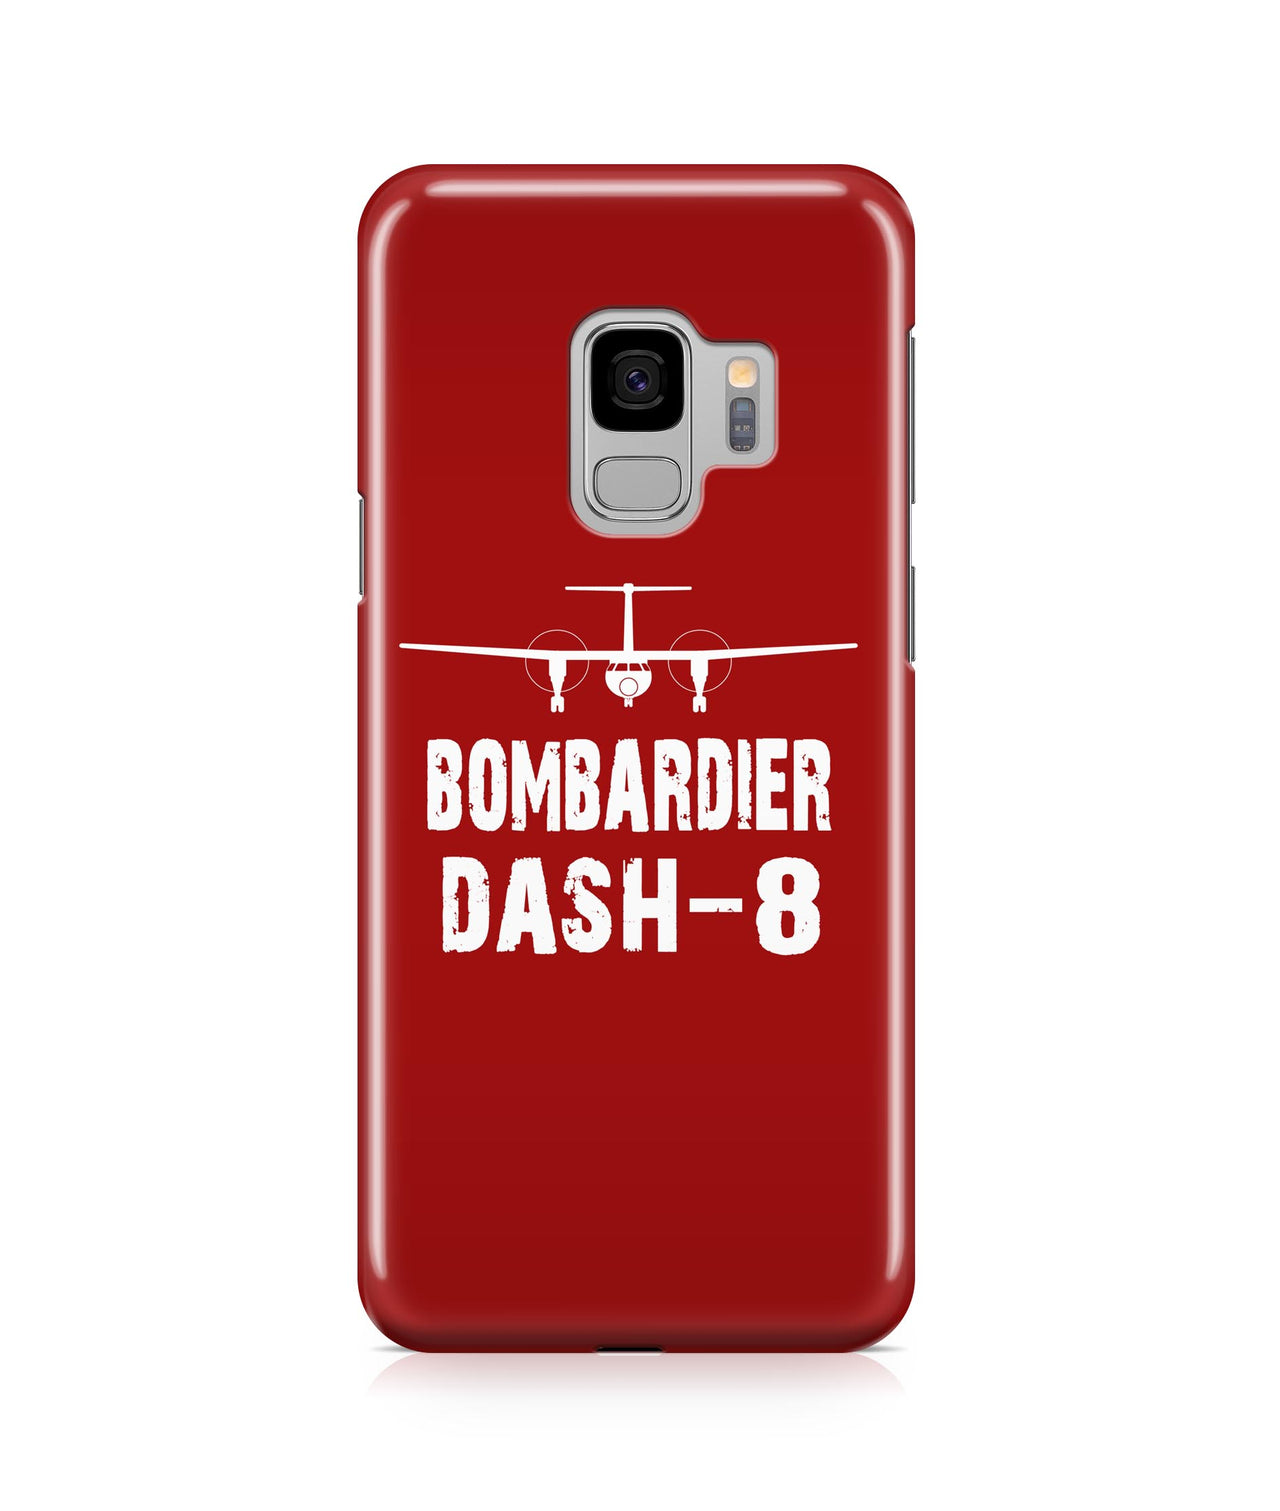 Bombardier Dash-8 Plane & Designed Samsung J Cases